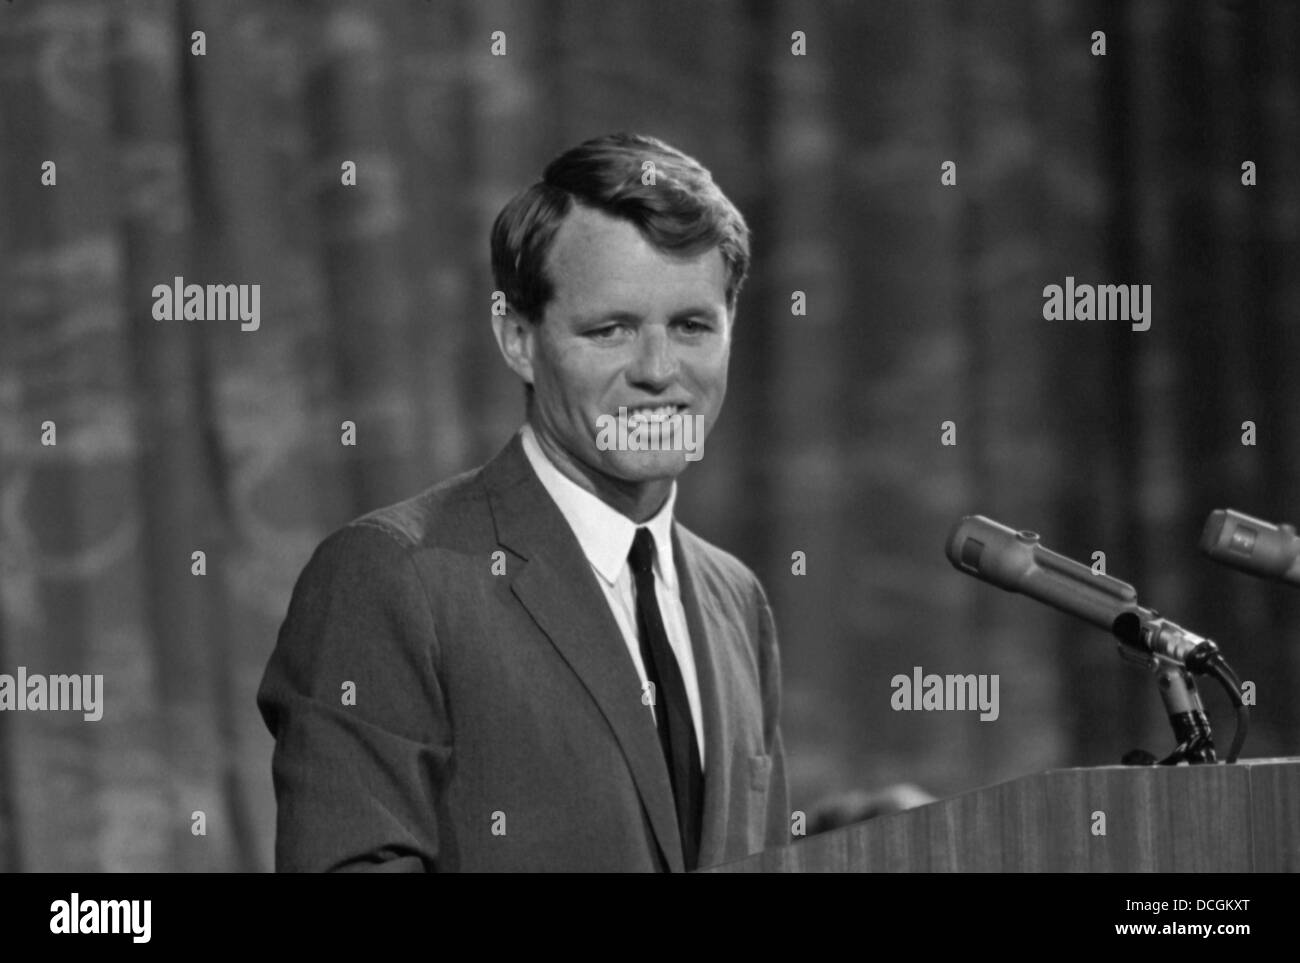 Digitally restored vintage photo of Robert Kennedy speaking at a podium. Stock Photo